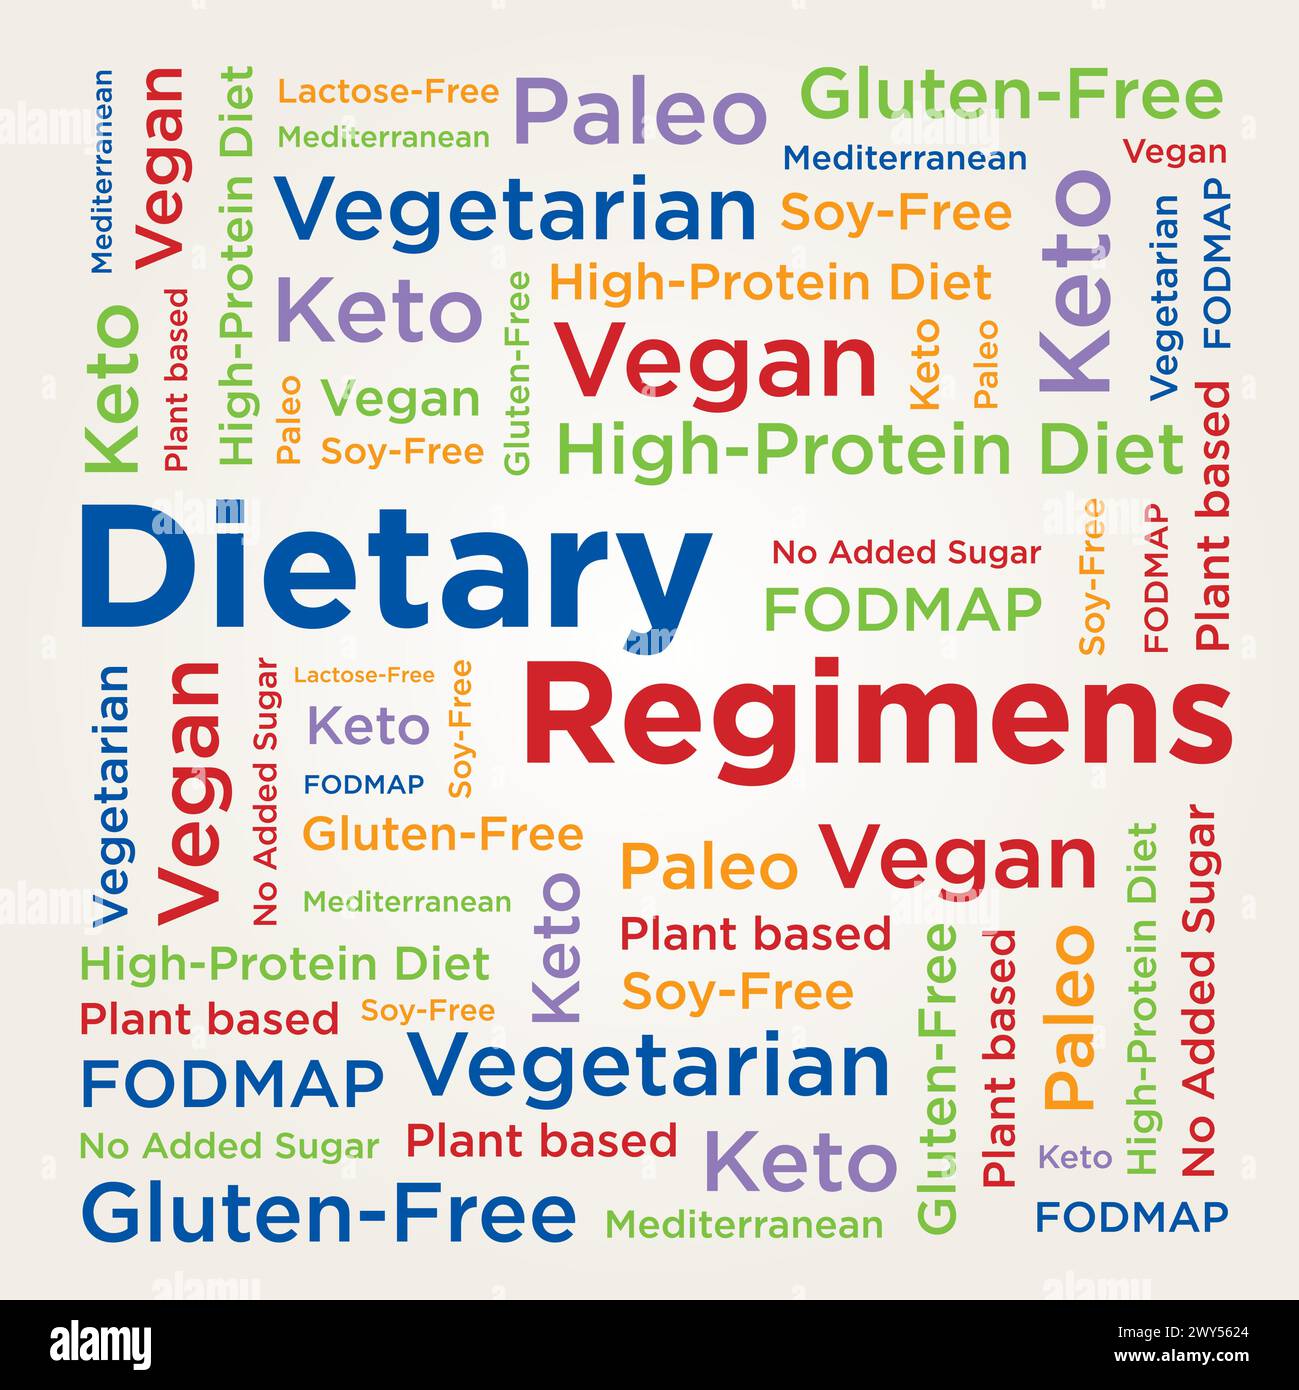 Dietary Regimens Various Diets Food Intolerances Preferences Choices Health Nutrition Word Cloud Illustration Vegan Protein Keto Paleo FODMAP Stock Vector